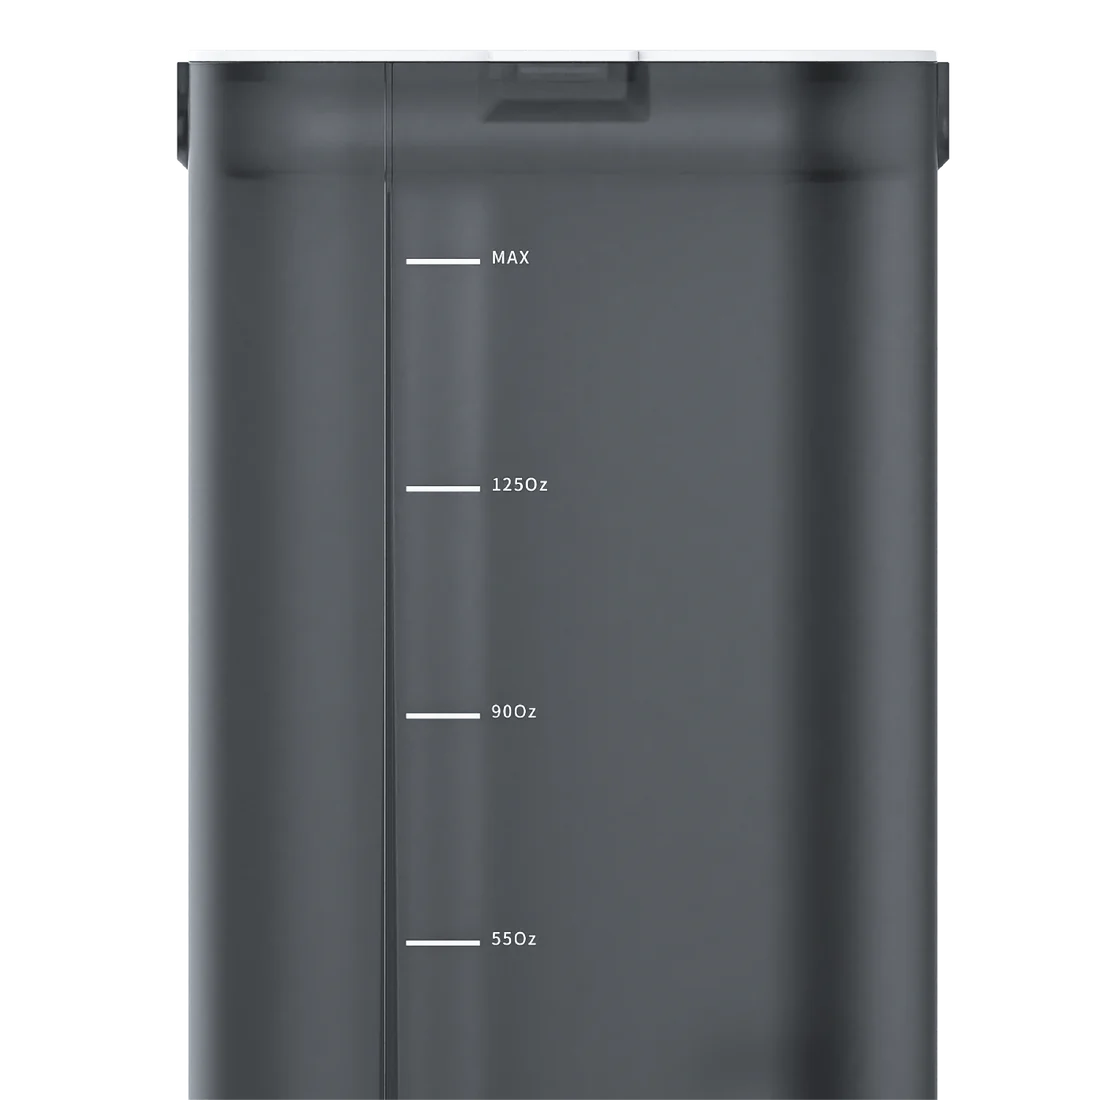 Reverse Osmosis Instant Hot Water Dispenser System - Waterdrop K6 –  SaltwaterSurvival